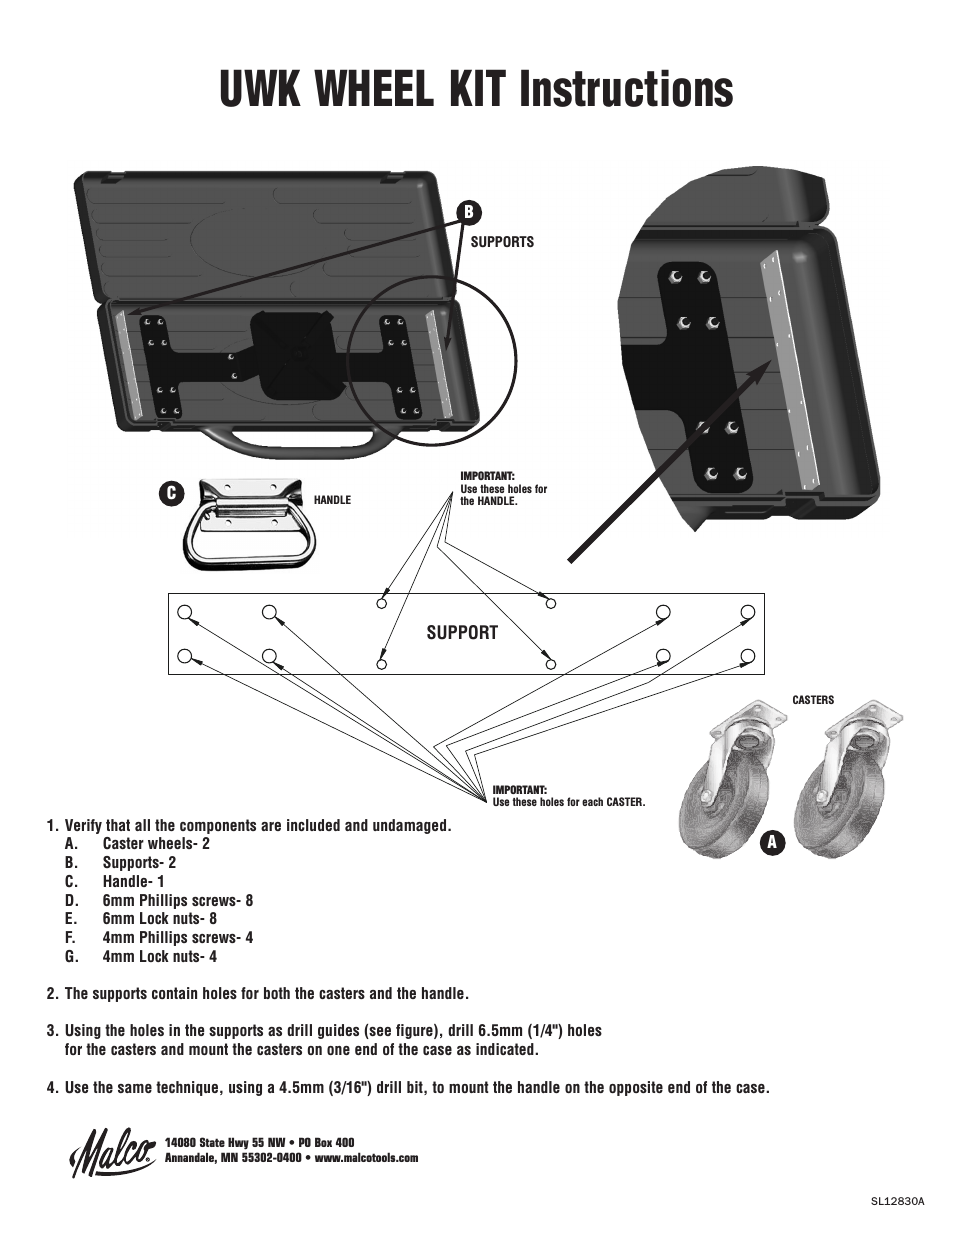 UC1 Wheel Kit Uncoiler: Pex Tubing